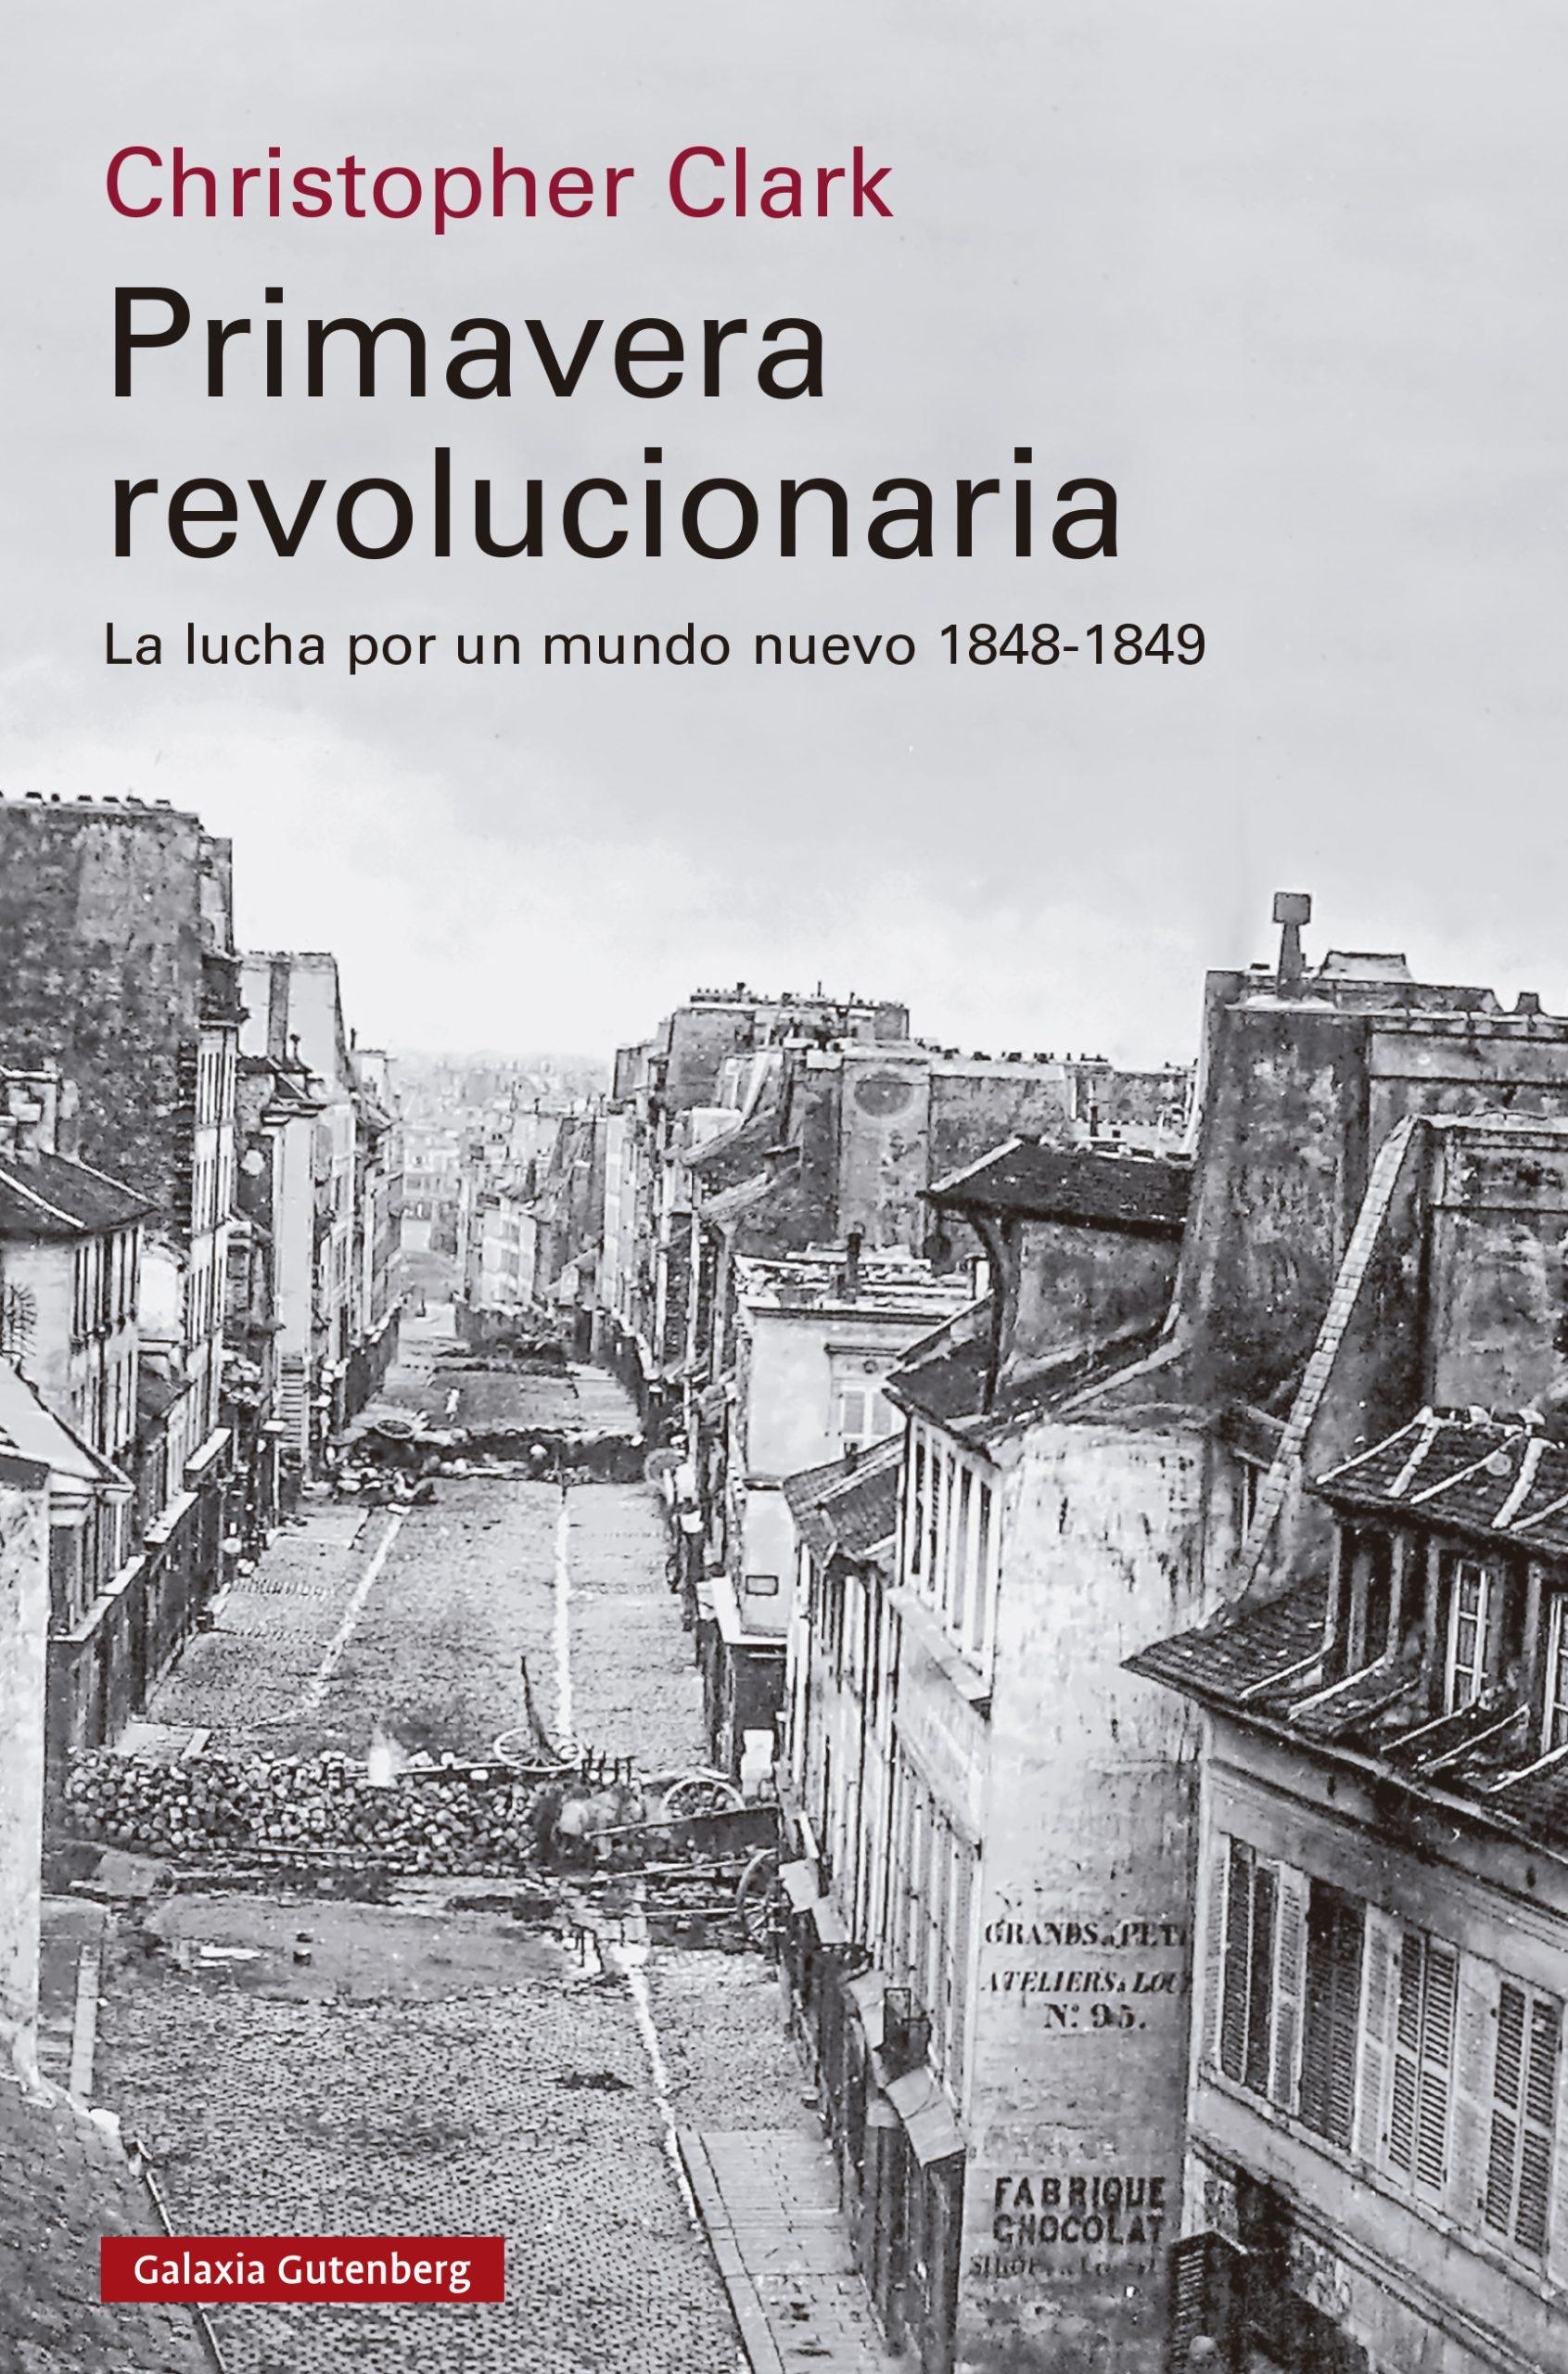 Primavera Revolucionaria "La Lucha por un Mundo Nuevo 1848-1849"